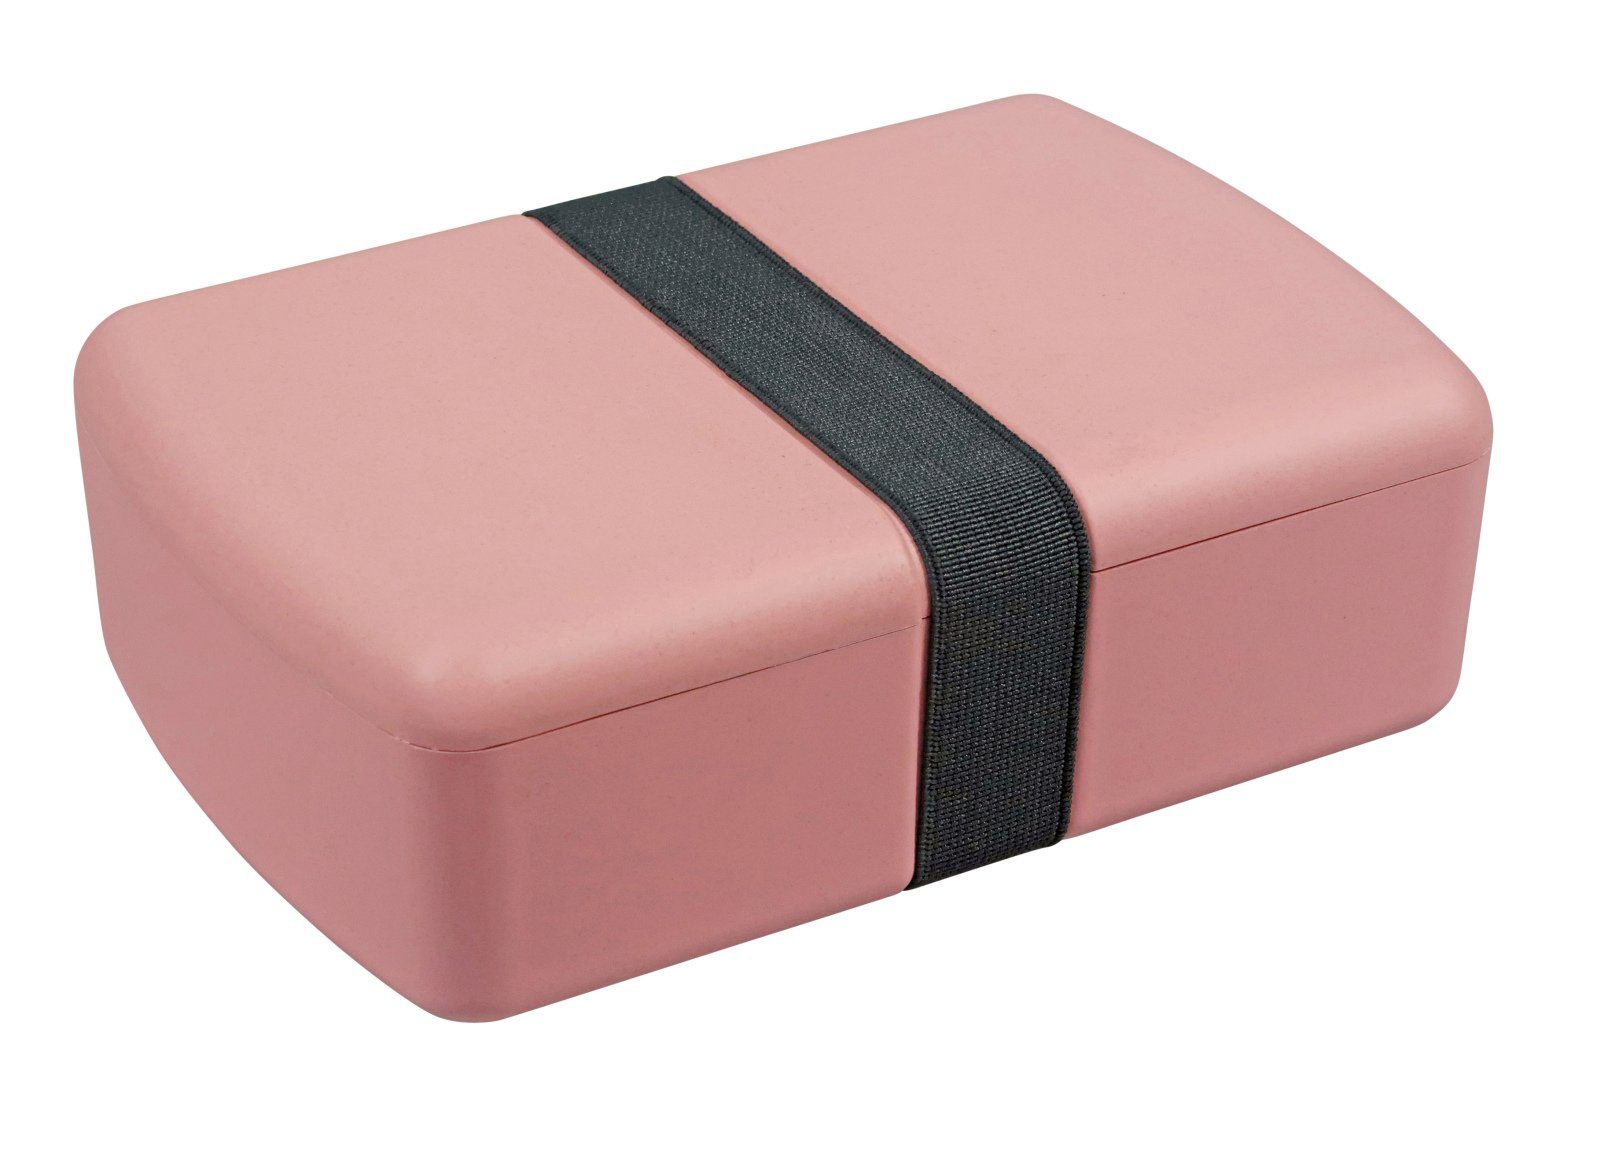 Zuperzozial TIME-OUT-BOX Capventure Lollipop-pink Brotdose Lunchbox